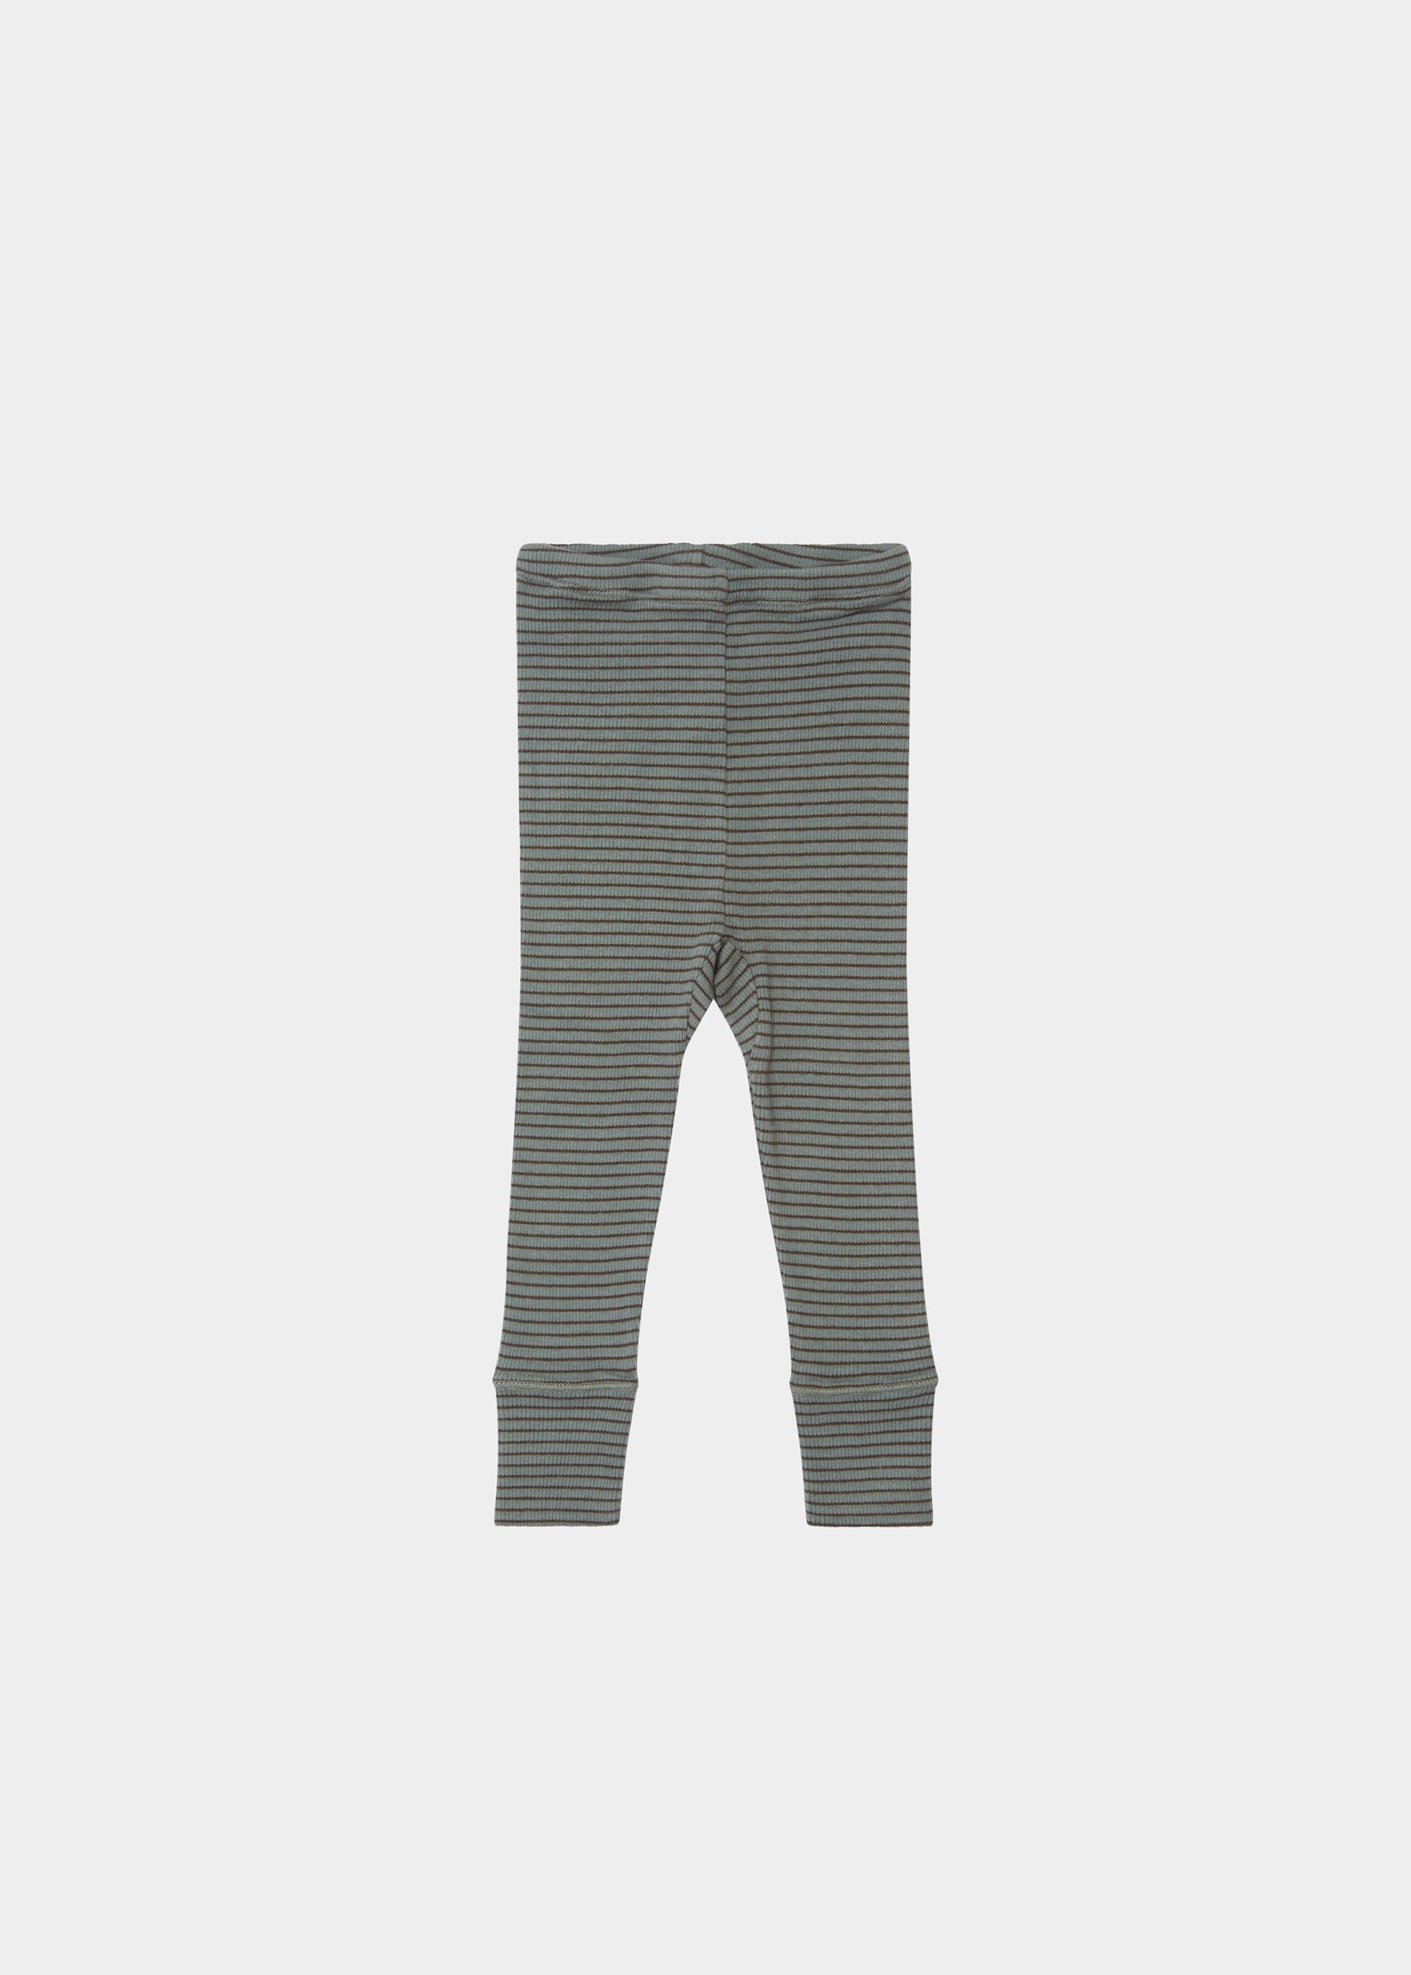 Buy Grey Legging Pyjamas from the Next UK online shop